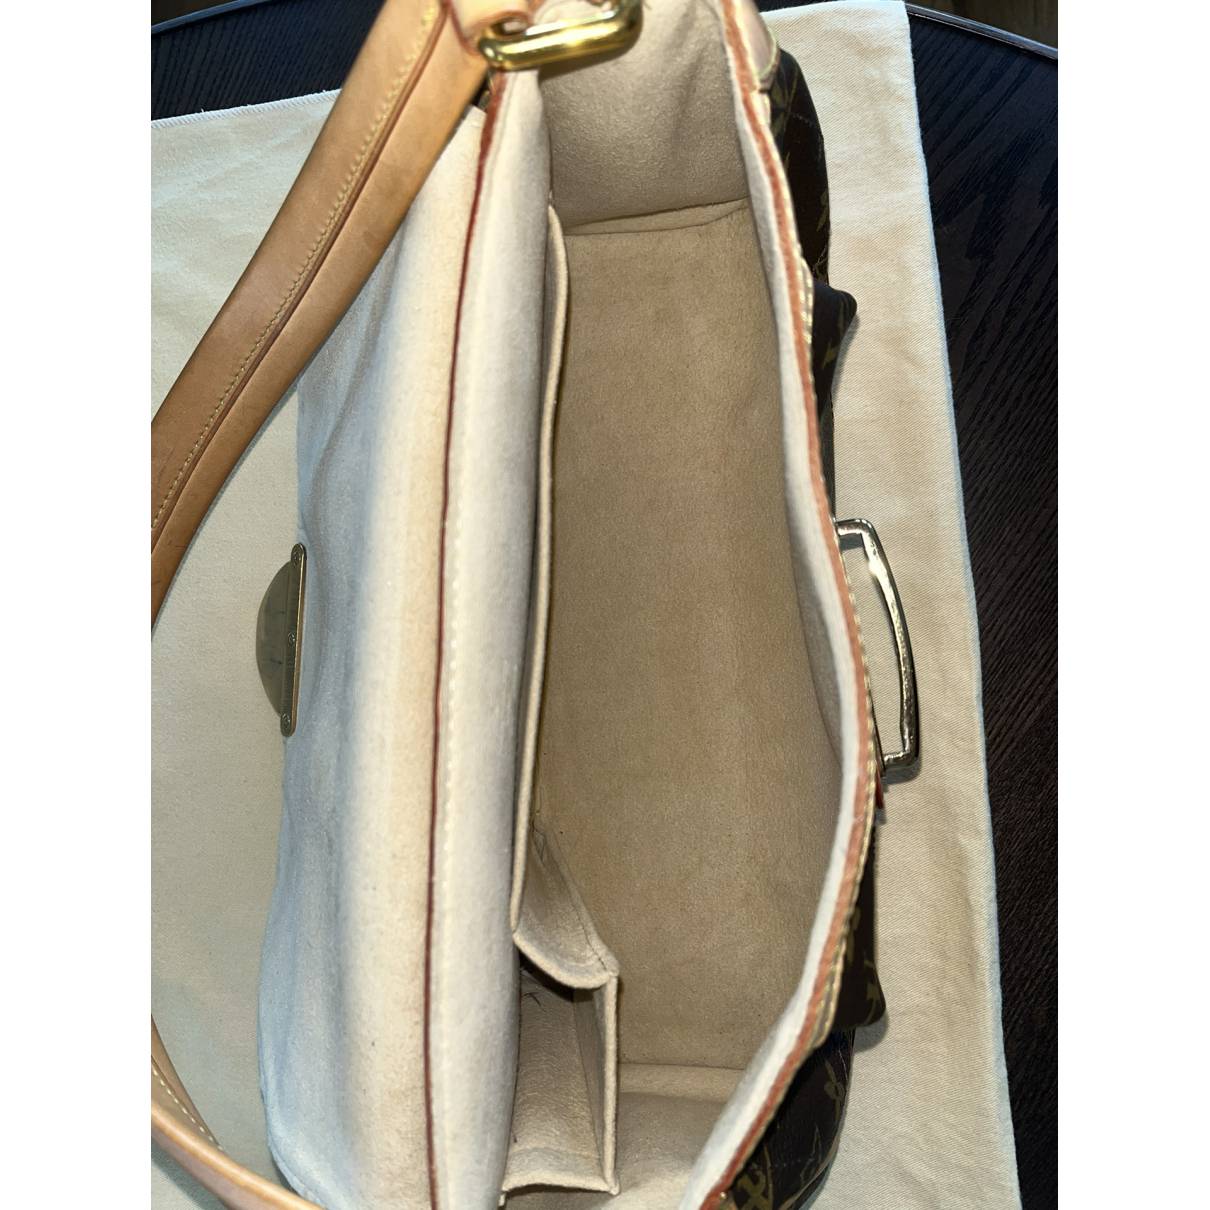 Beverly leather handbag Louis Vuitton